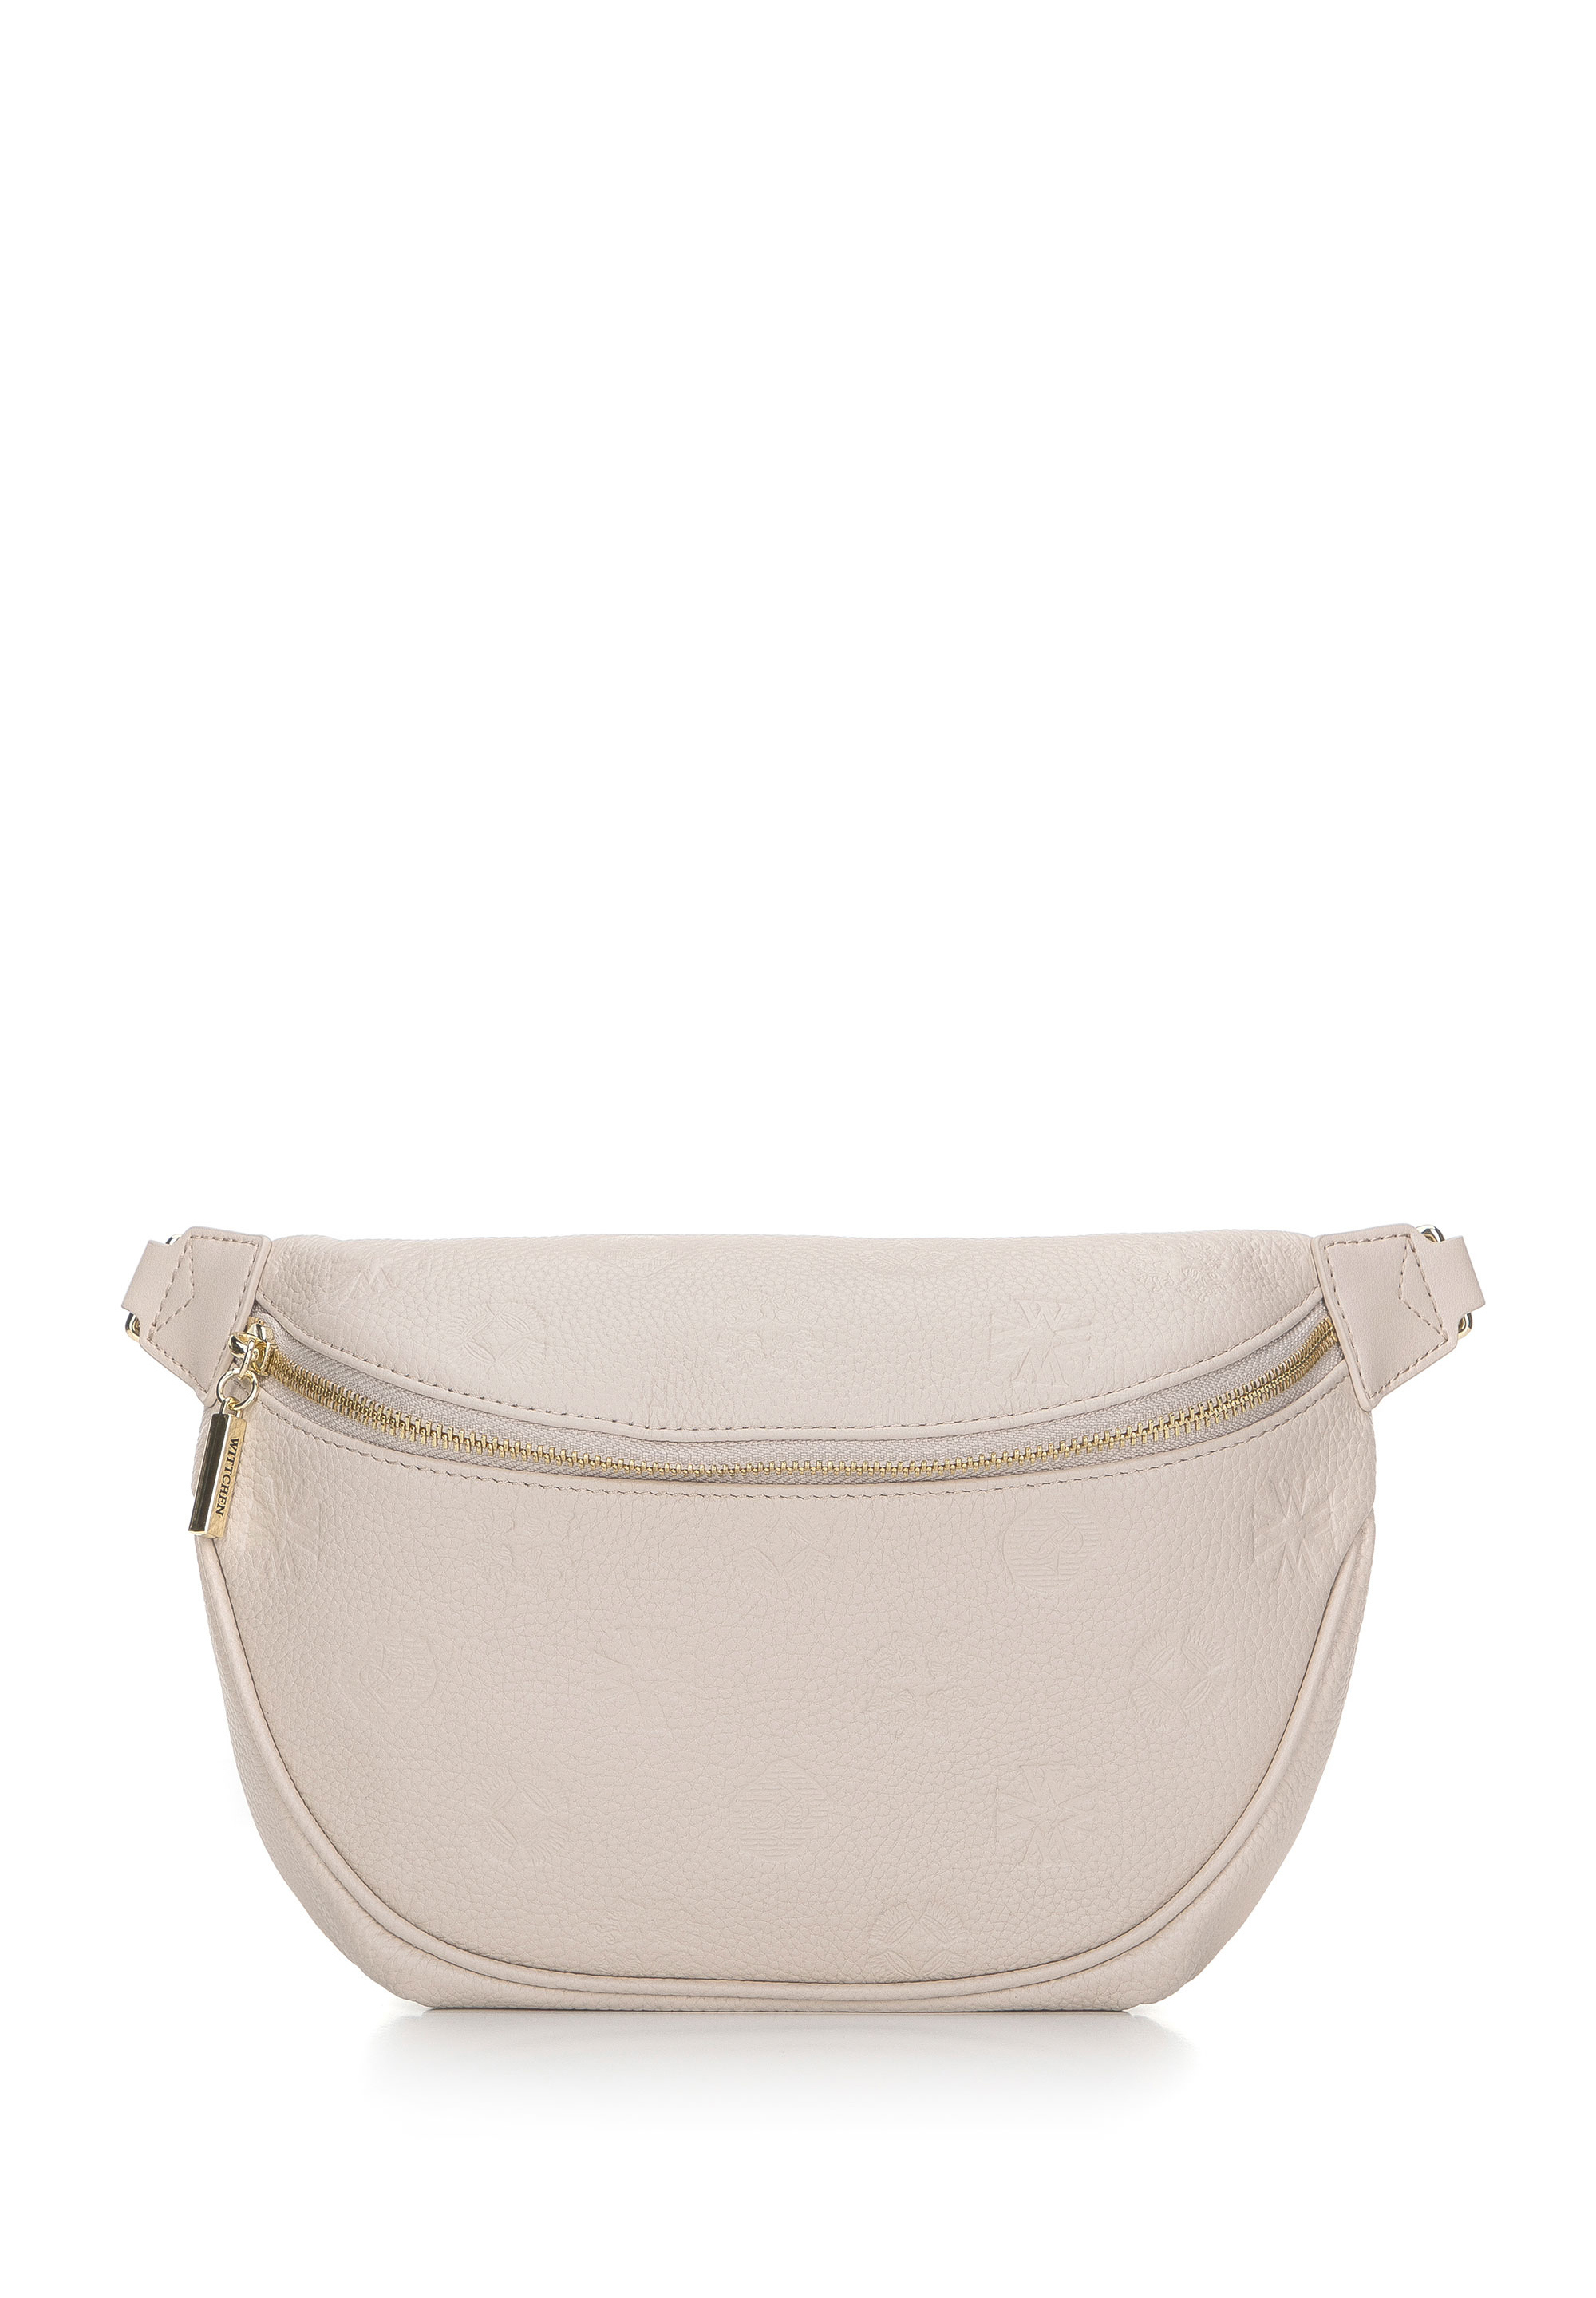 Сумка Wittchen Elegance Collection, цвет Light beige сумка женская florence collection m191 beige ут 00011252